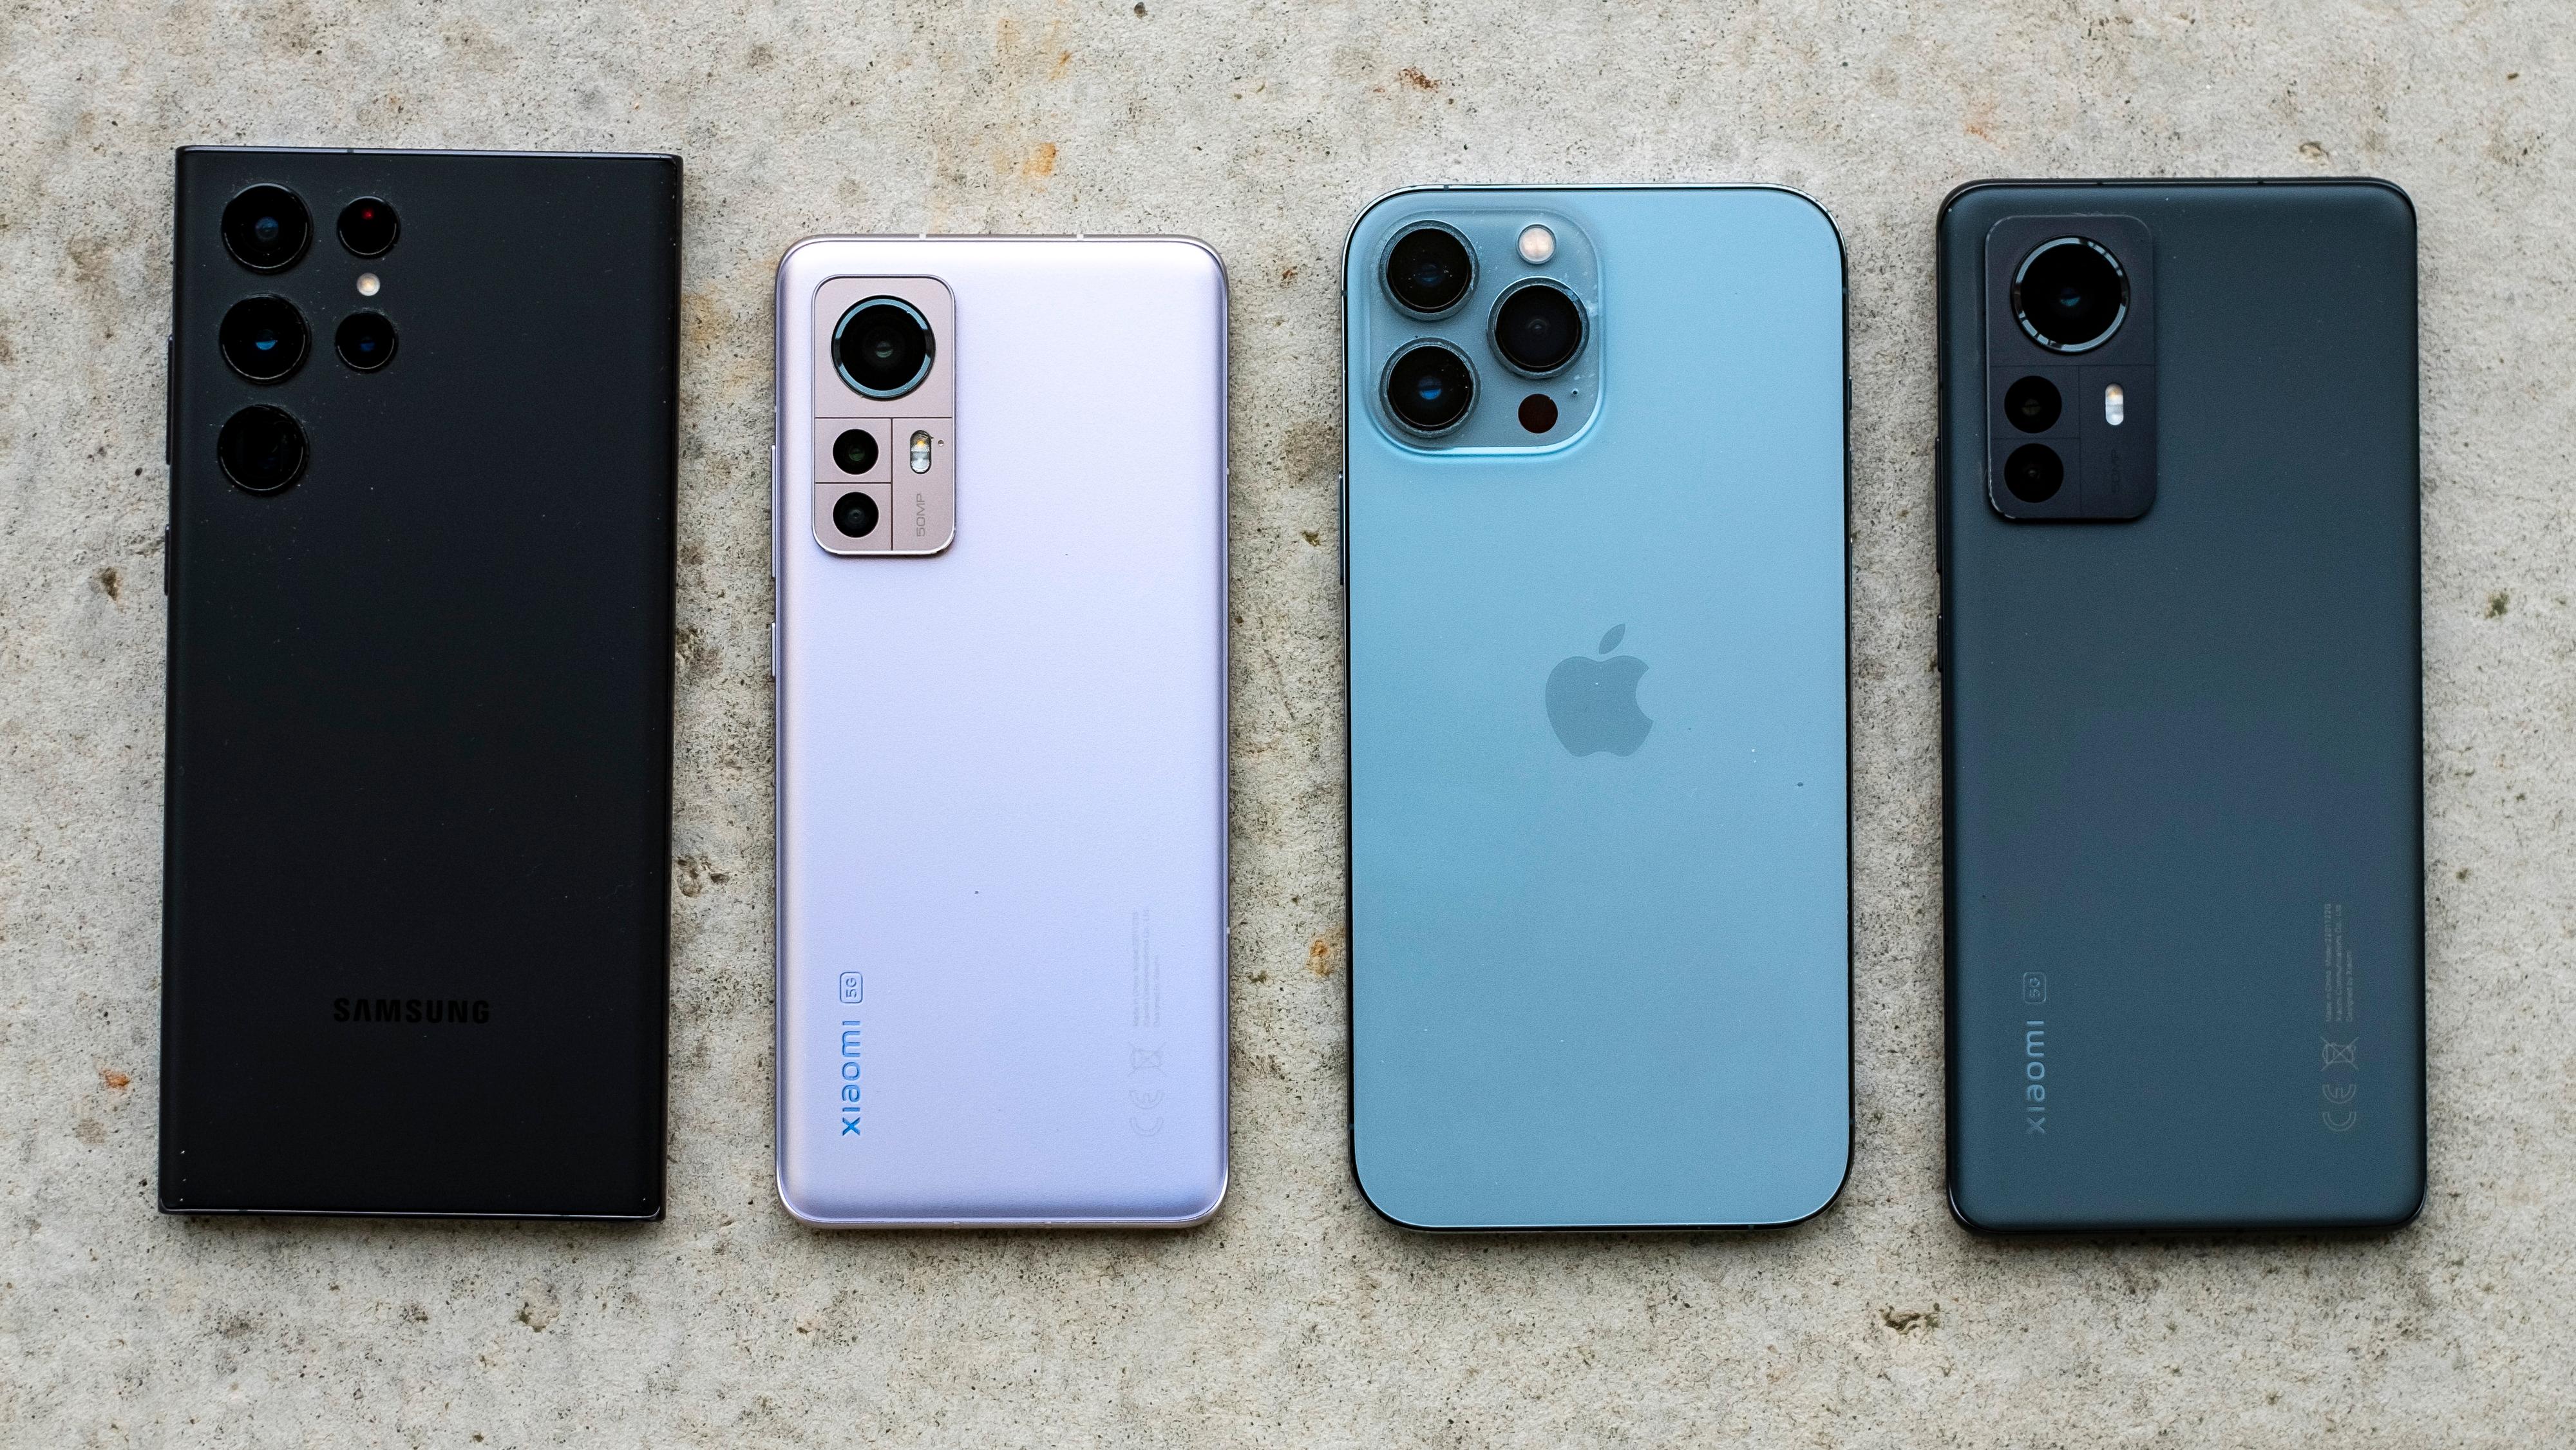 Fra venstre: Samsung Galaxy S22 Ultra, Xiaomi 12, Apple iPhone 13 Pro Max og Xiaomi 12 Pro.